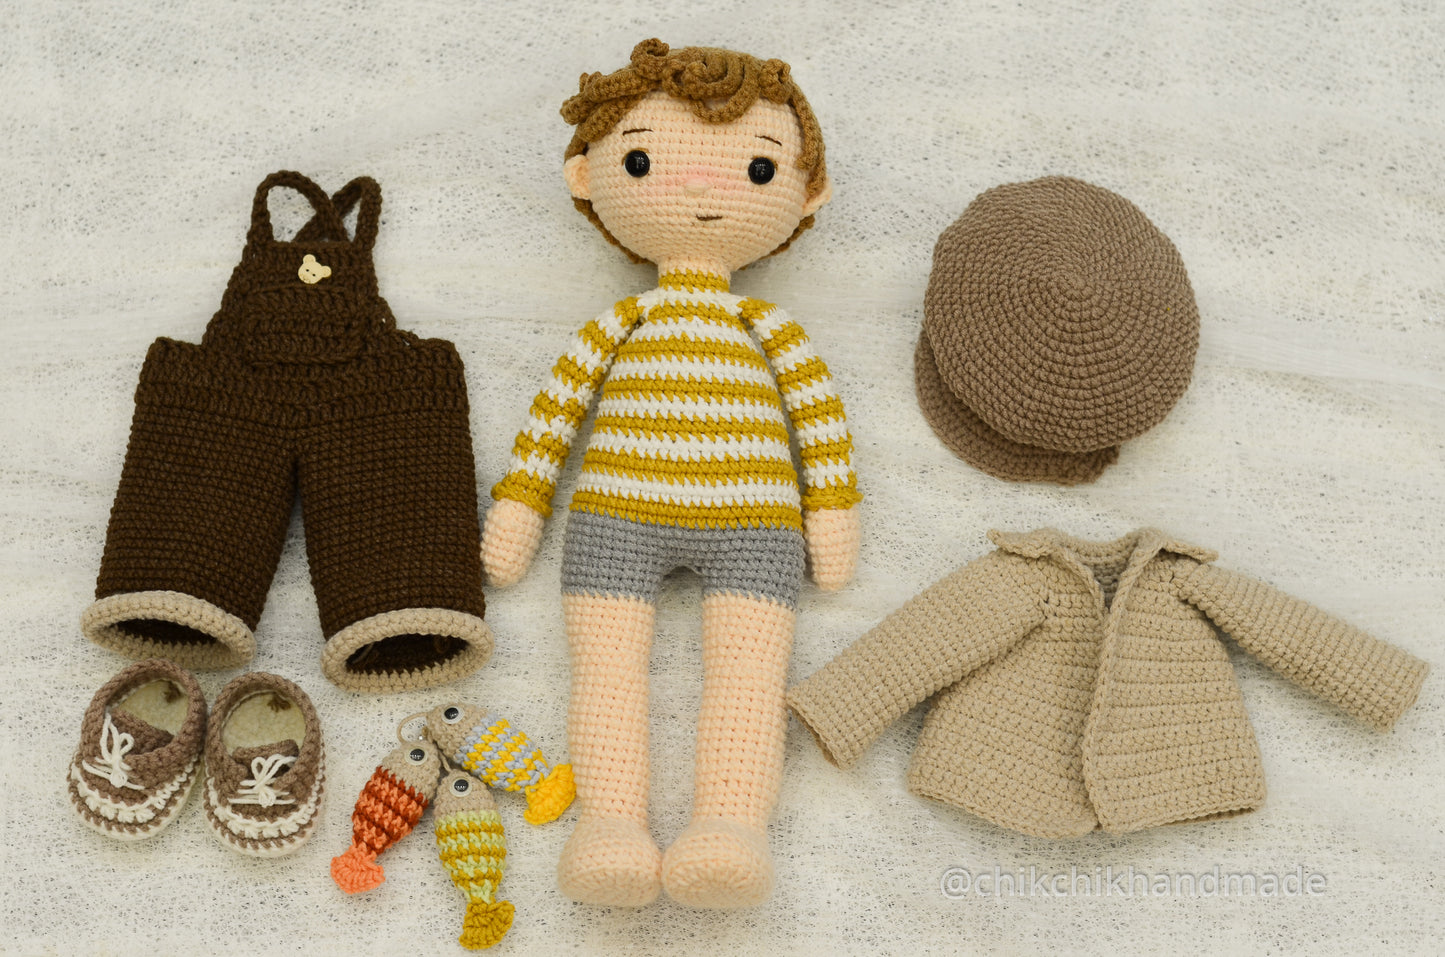 Crochet Doll Pattern Amigurumi, TOMMY The Fisher, PDF in English, French, Dutch, Portuguese